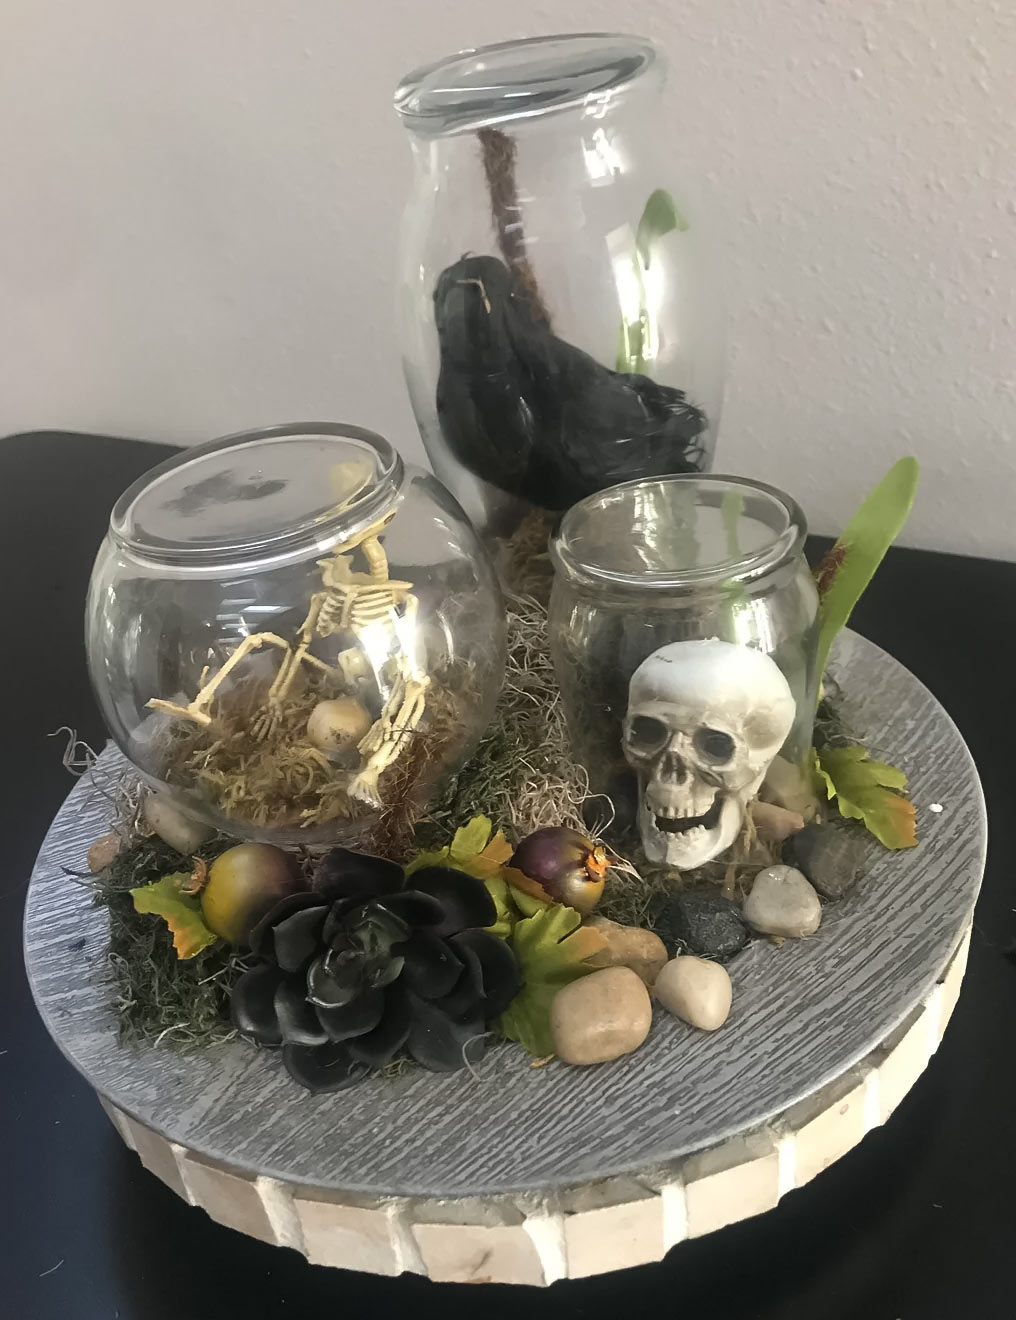 Three Halloween terrariums with raven, skeleton and skull inside